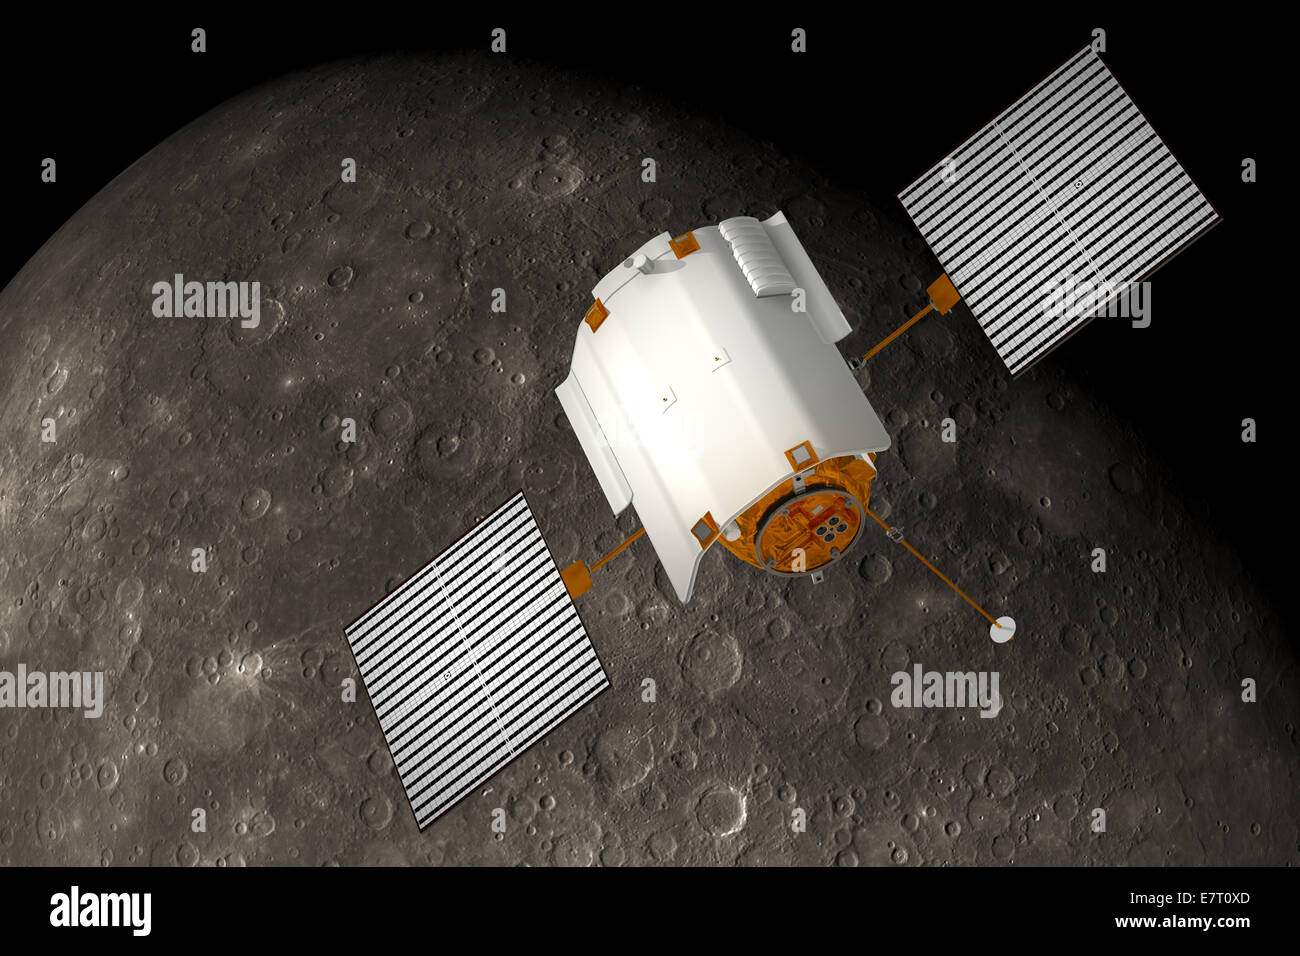 Veicolo spaziale 'messaggero' orbita mercurio Foto Stock